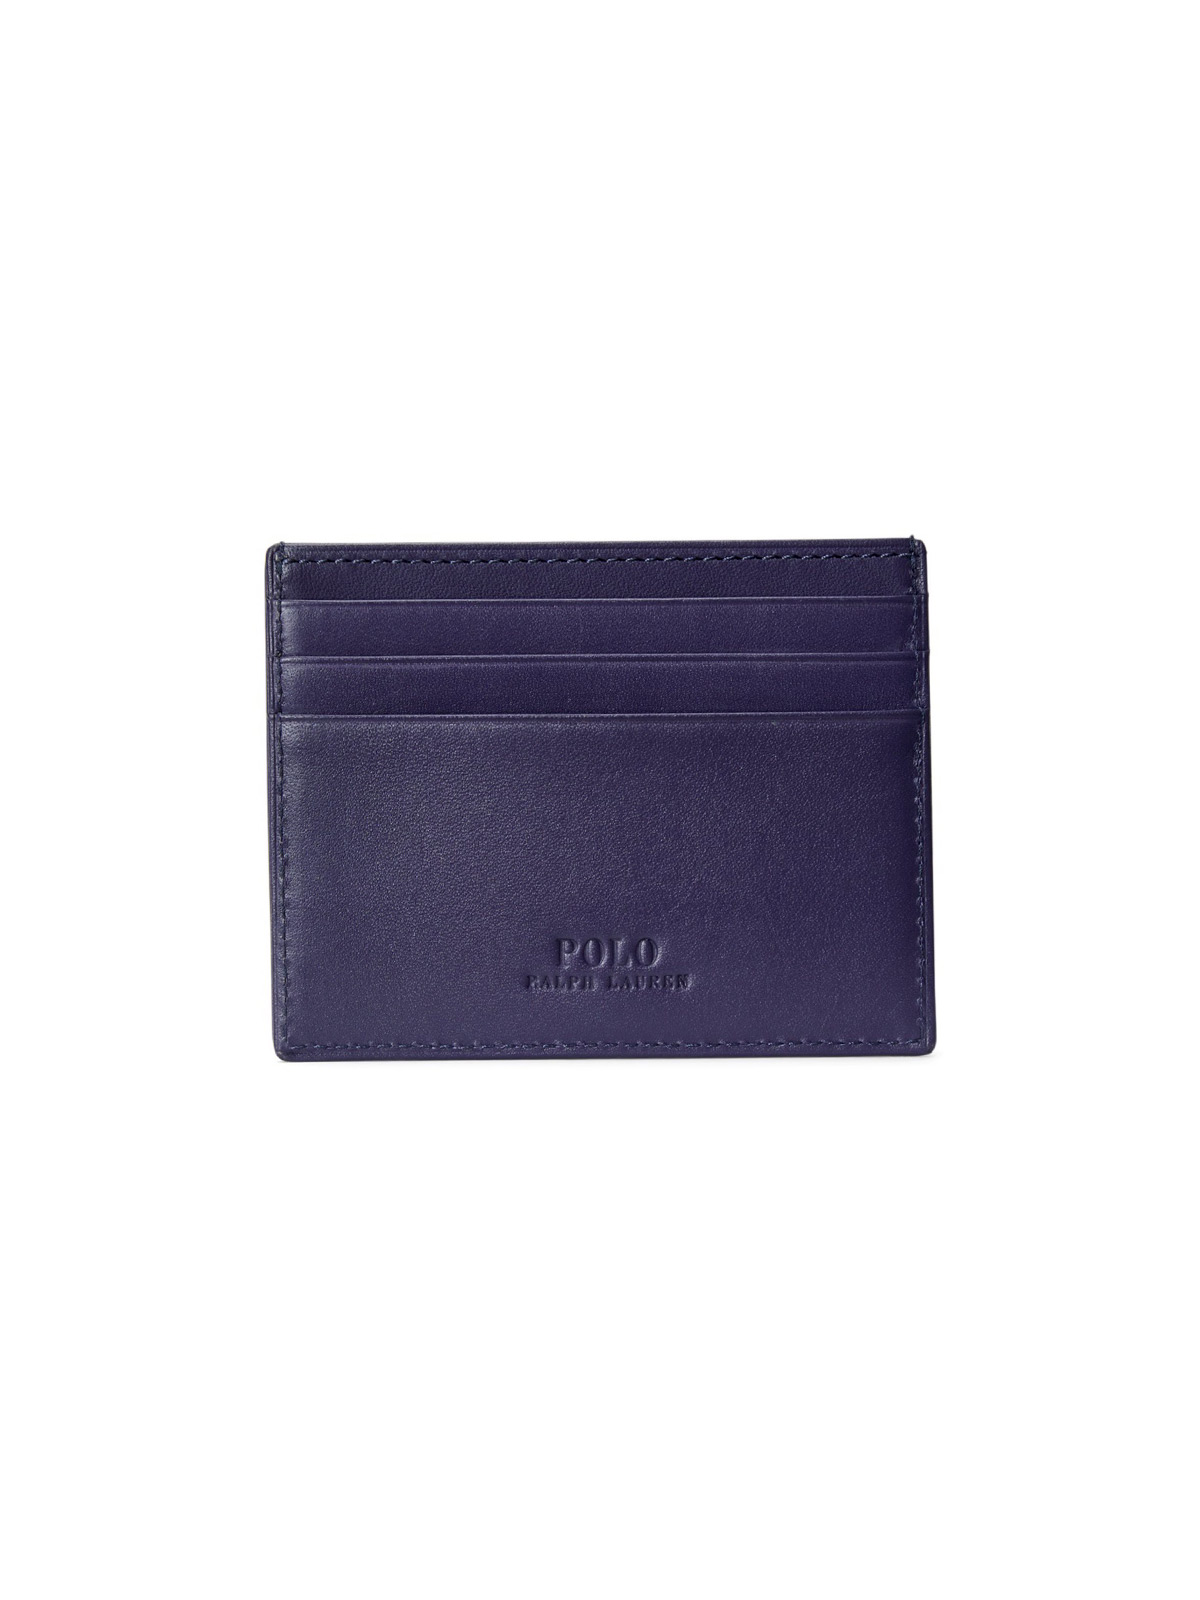 Immagine di Polo Ralph Lauren | Wallet Card Case